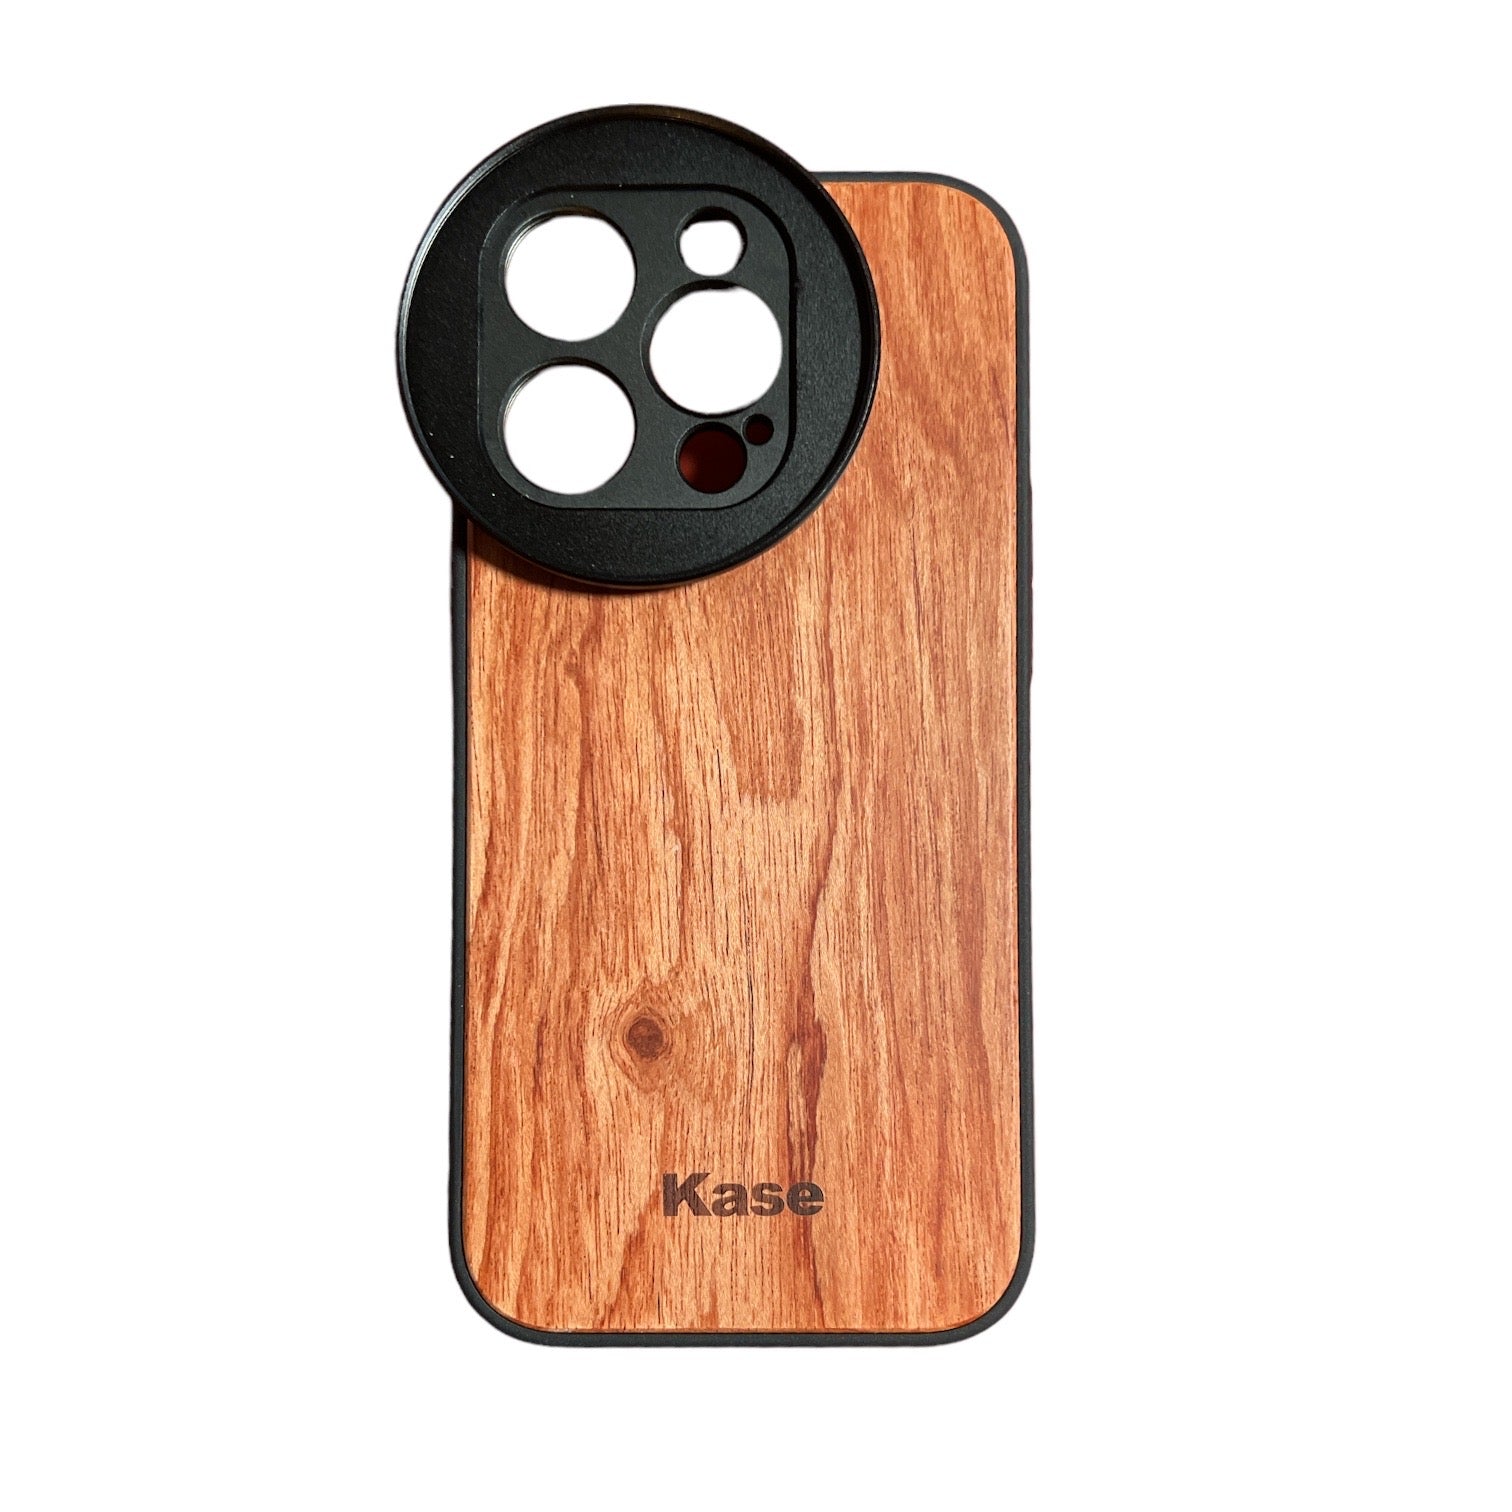 Kase Lens Case for iPhone 14 Plus